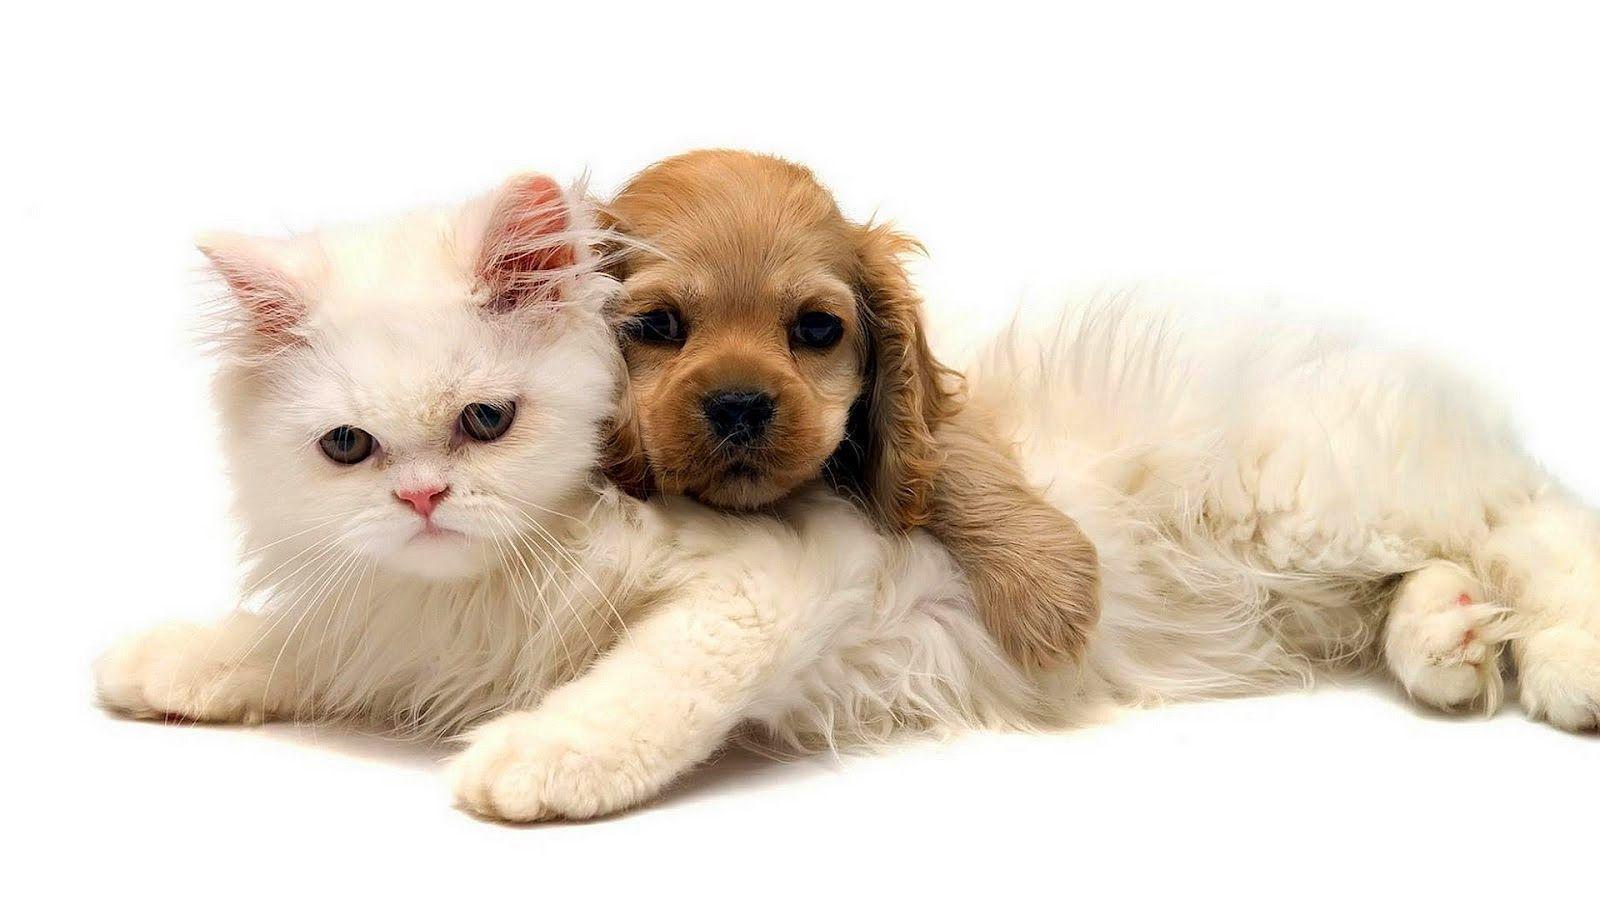 Cat and dog cuddling wallpaper. HD Animals Wallpaper